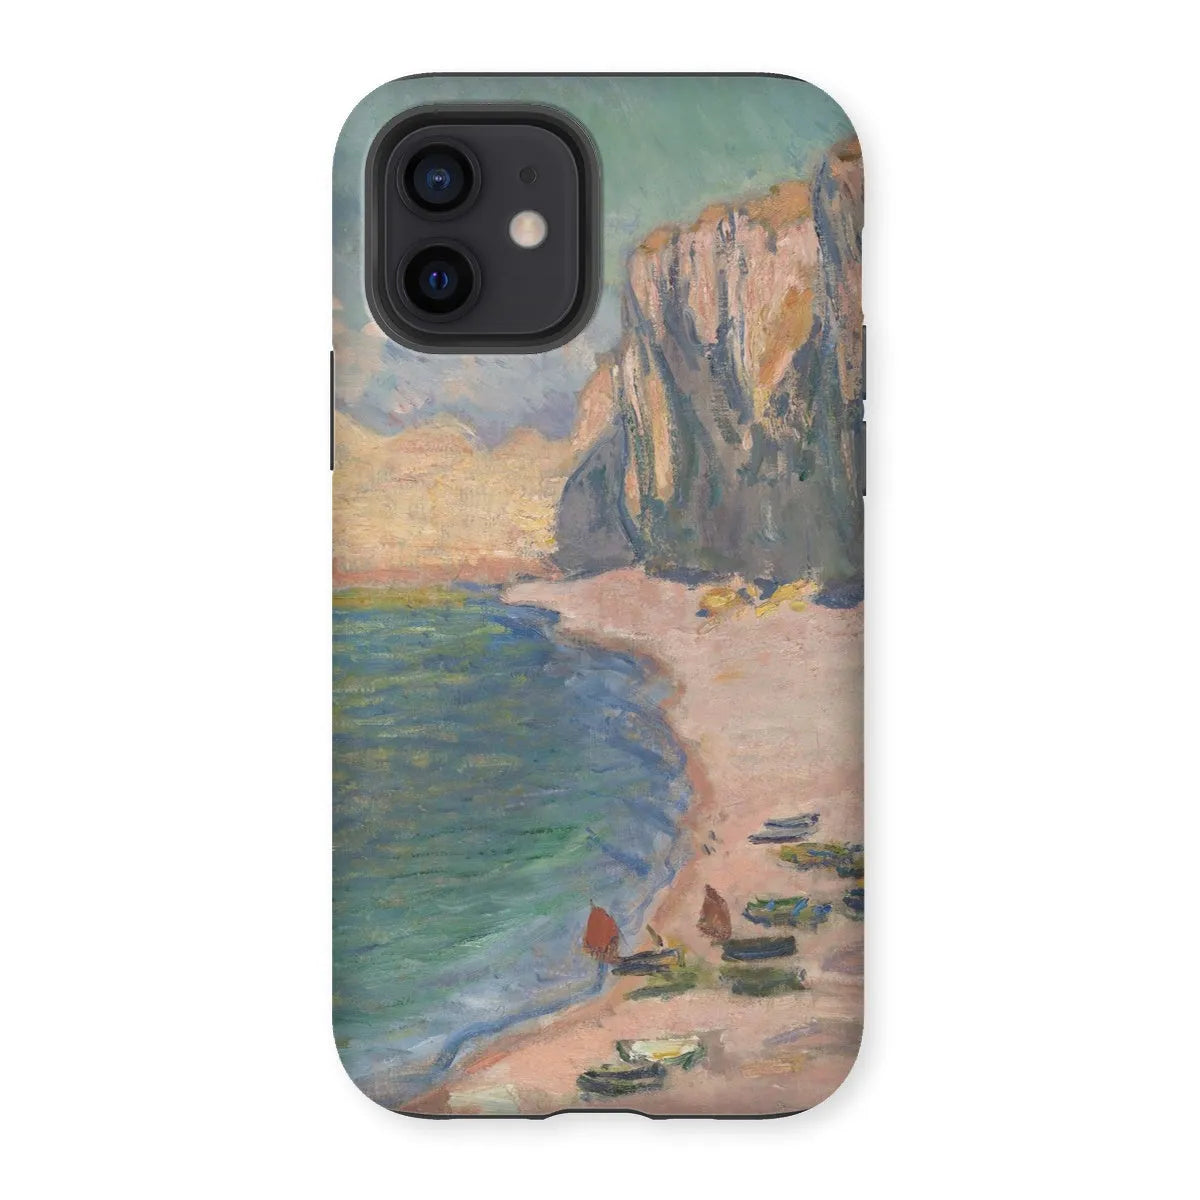 étretat - Impressionist Art Phone Case - Claude Monet - Iphone 12 / Matte - Mobile Phone Cases - Aesthetic Art